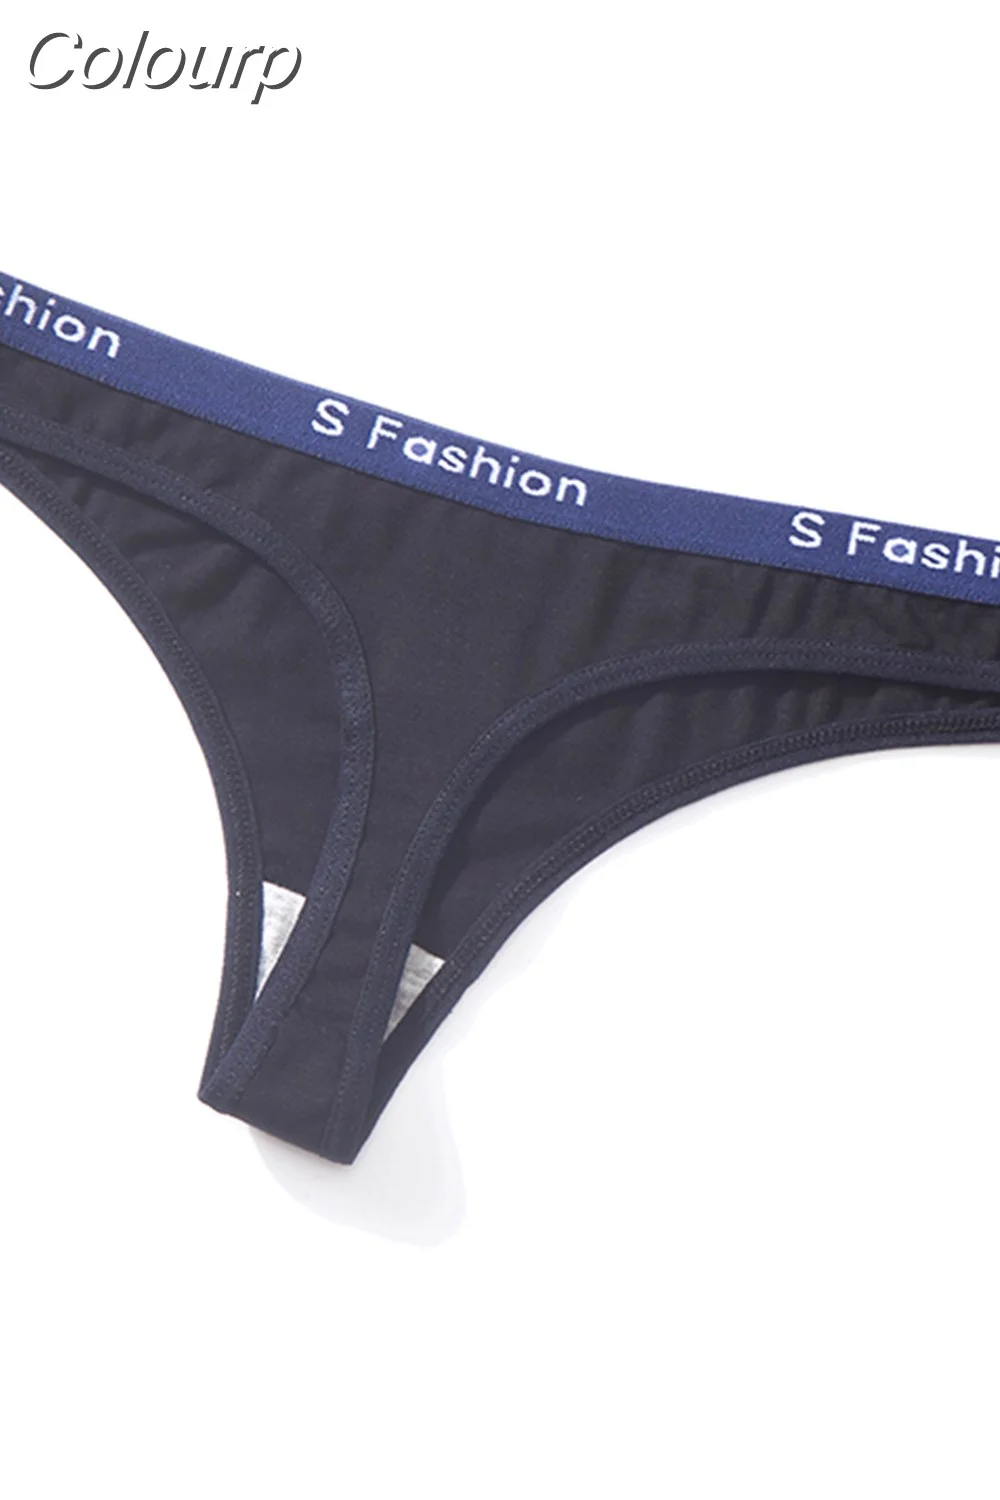 Colourp 1Pcs Cotton Panties For Woman G-String Lingerie Fashion Female Underwear Women's T-back Sports Fitness Intimates